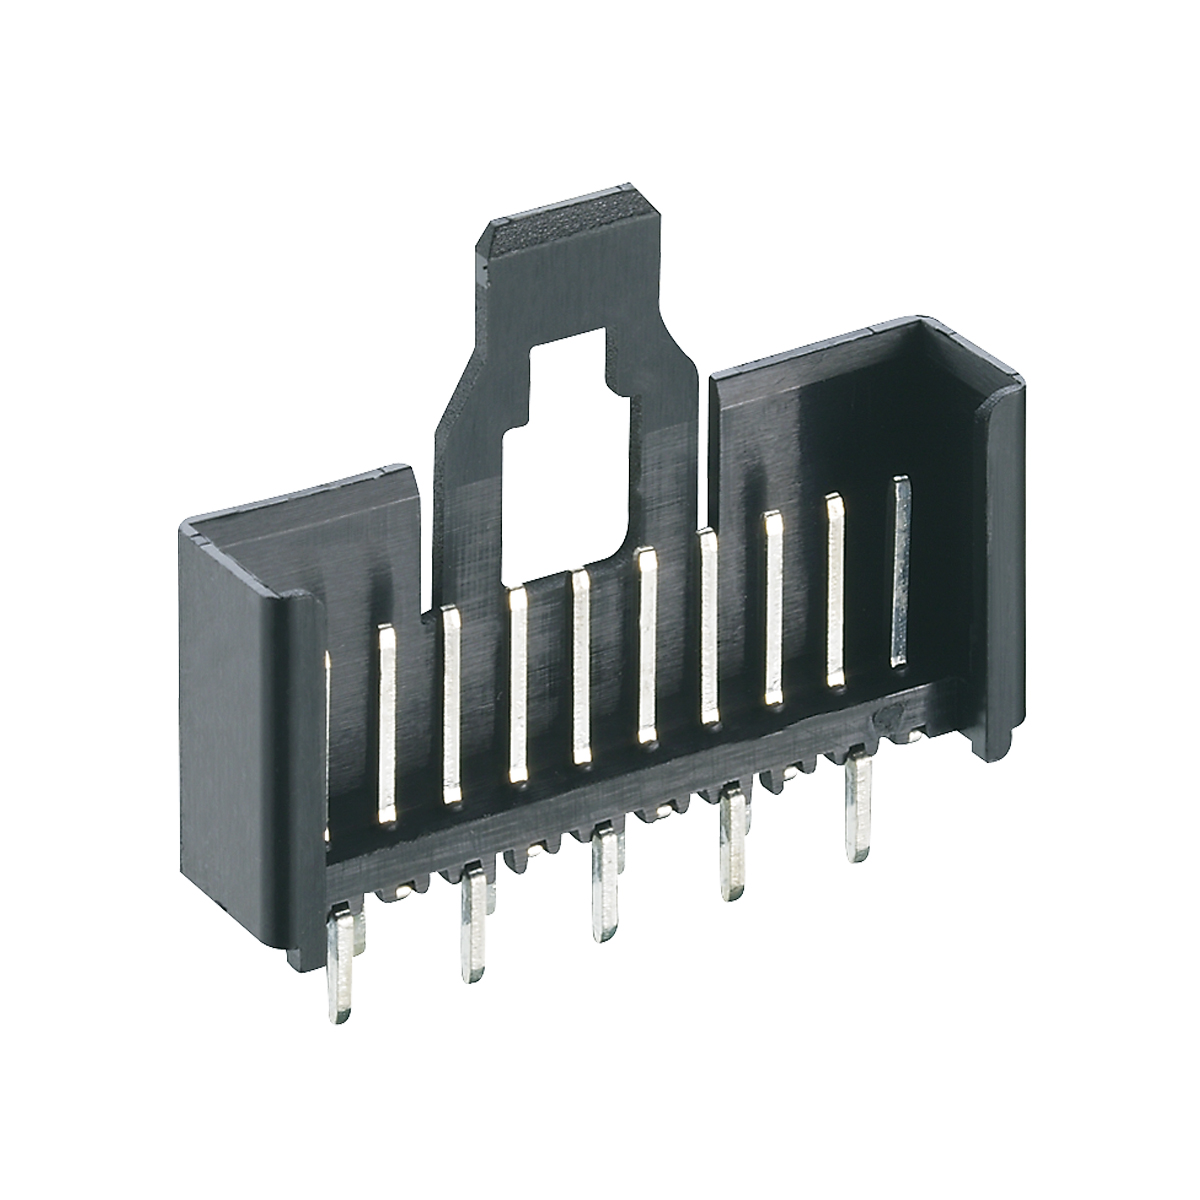 Lumberg: 2,5 MSFQ (Series 31 | Minimodul™ connectors, pitch 2.5 mm)